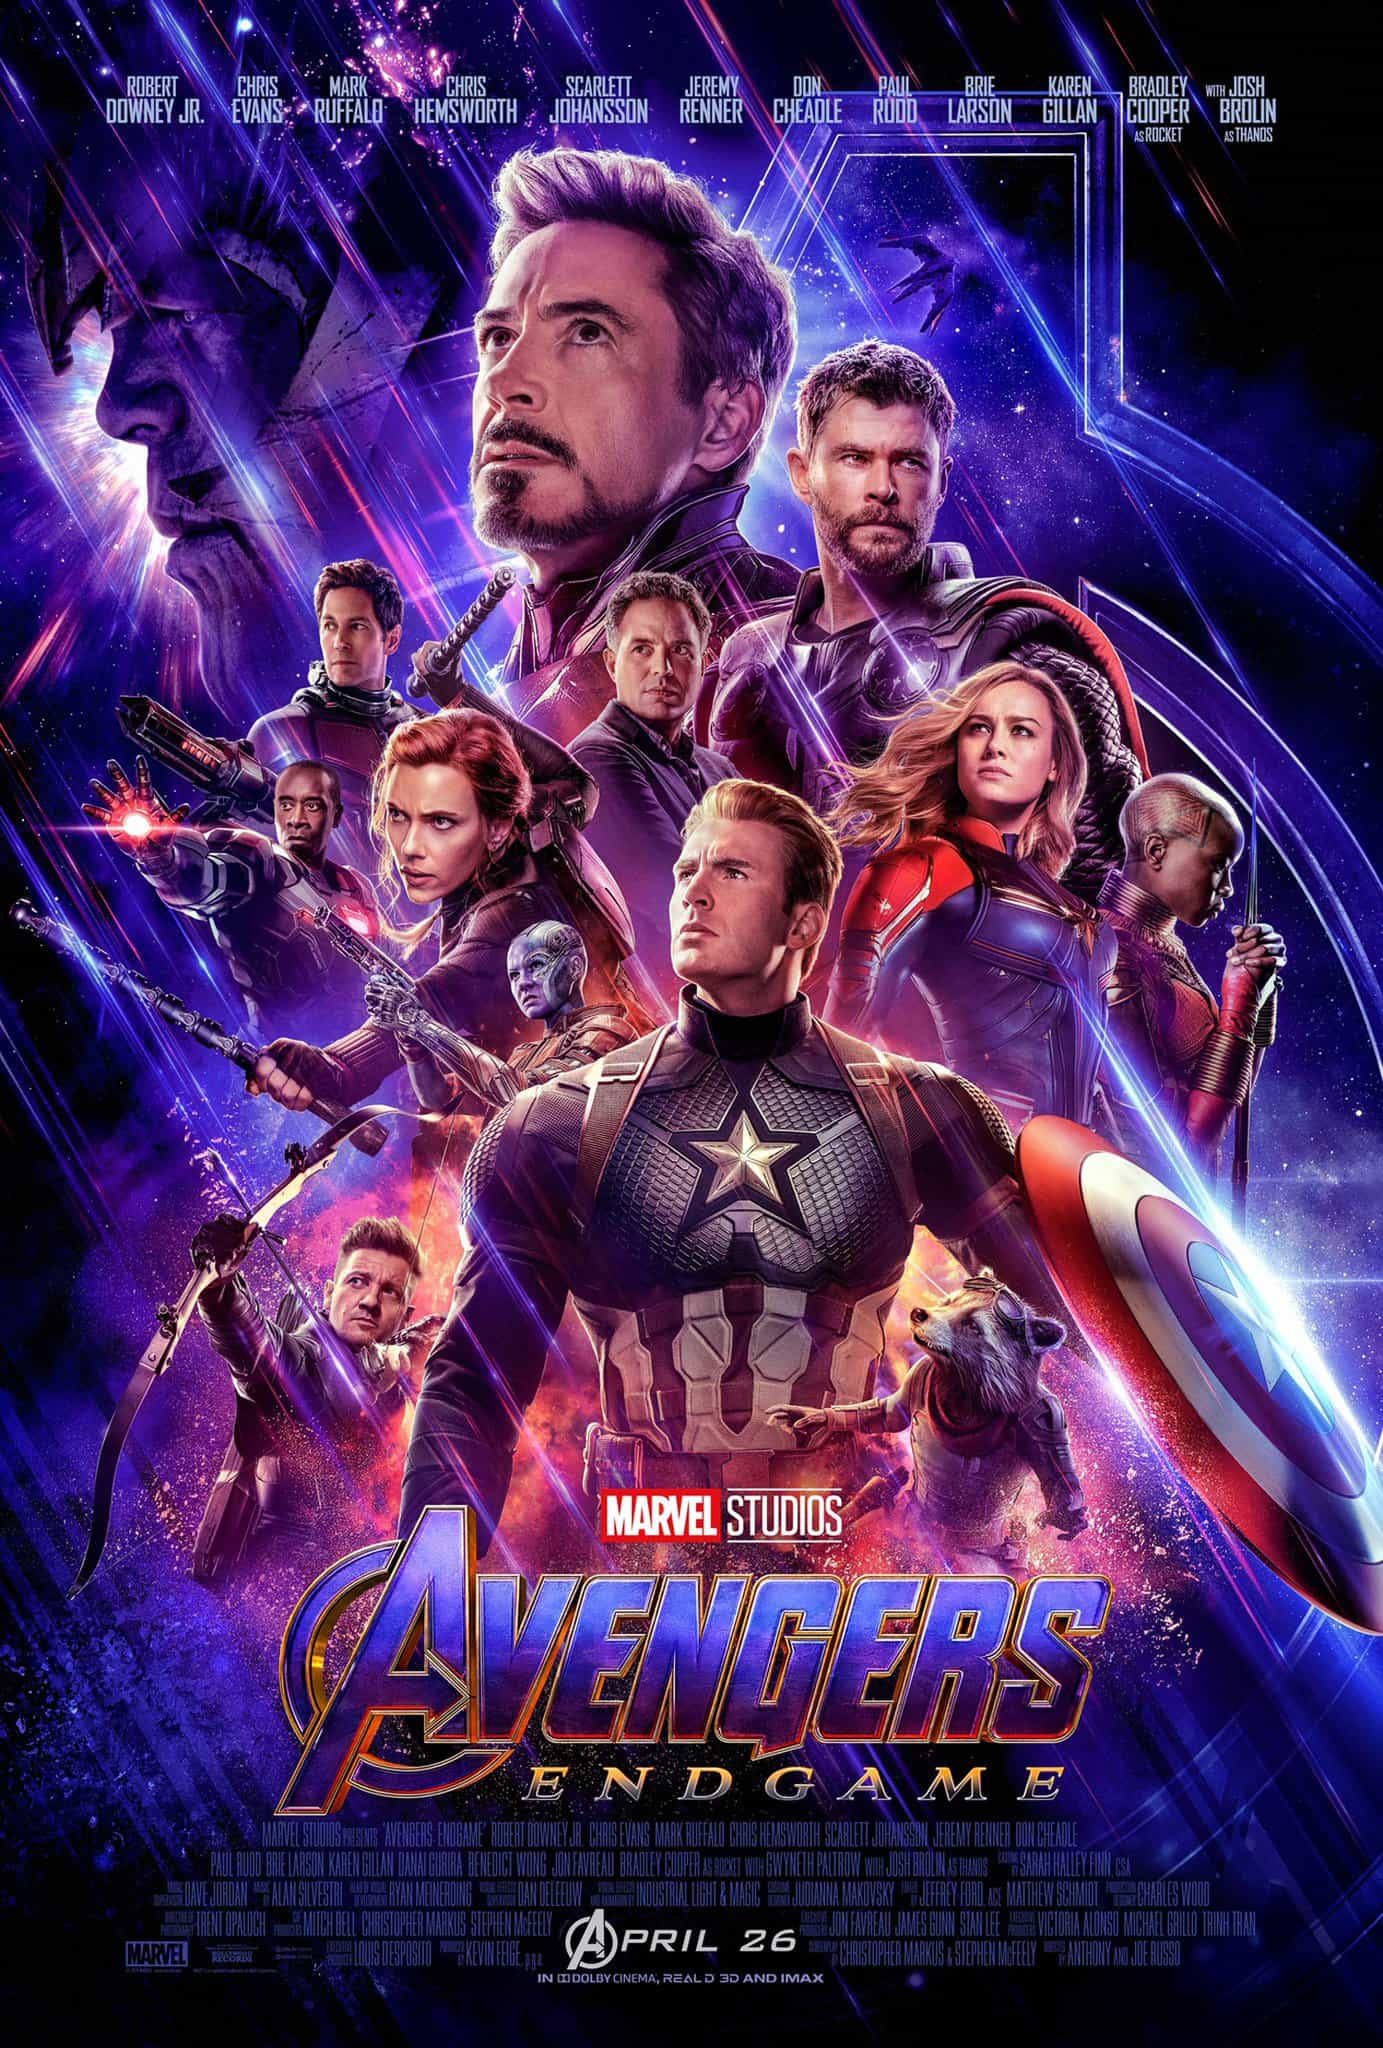 New trailer for Avengers Endgame - released in the UK 25th April 2019